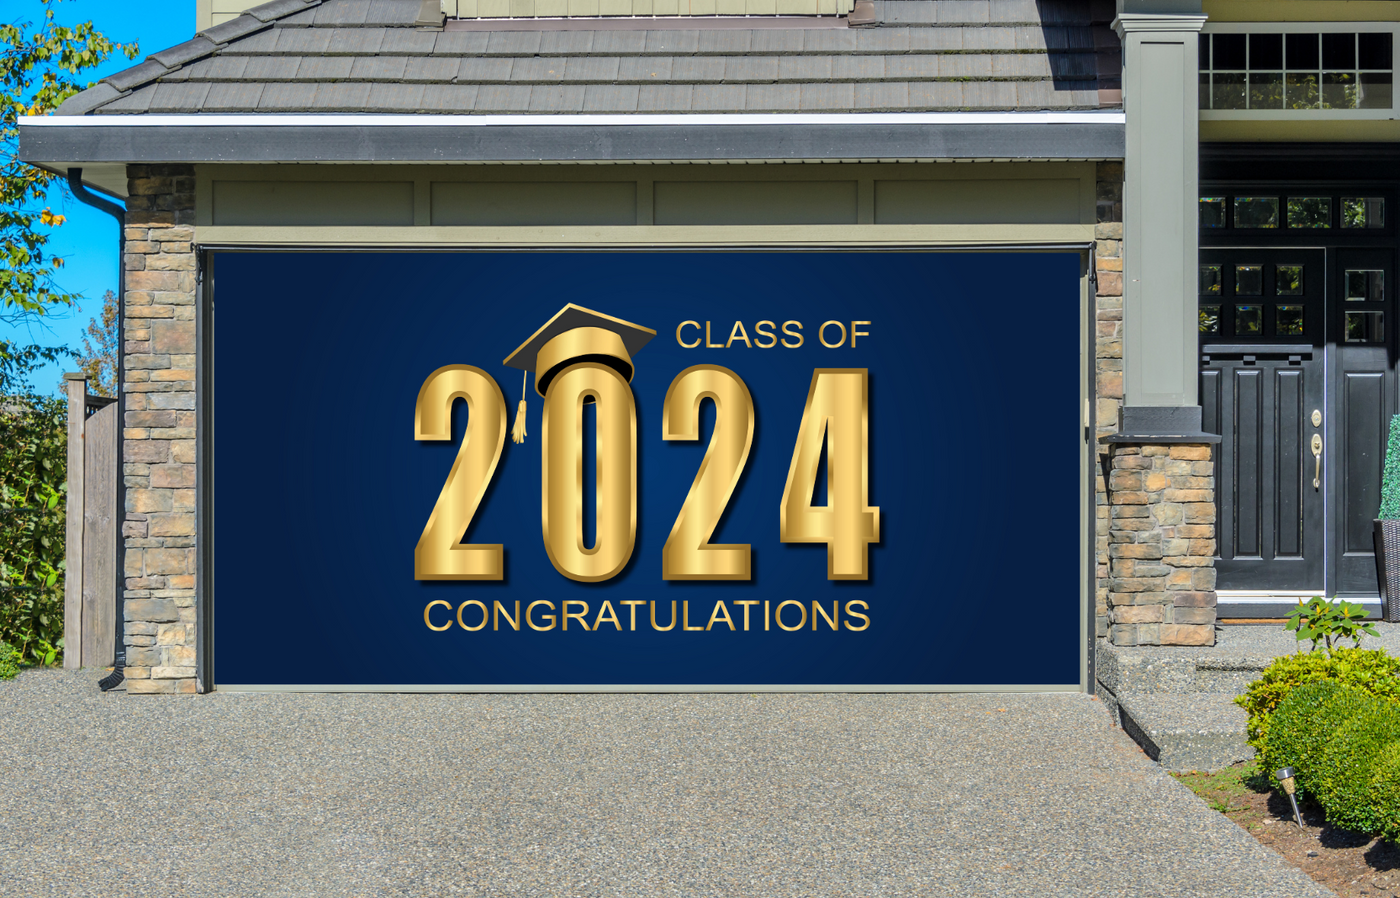 Graduation Class of 2024 Garage Door Wrap Cover Backdrop Decoration